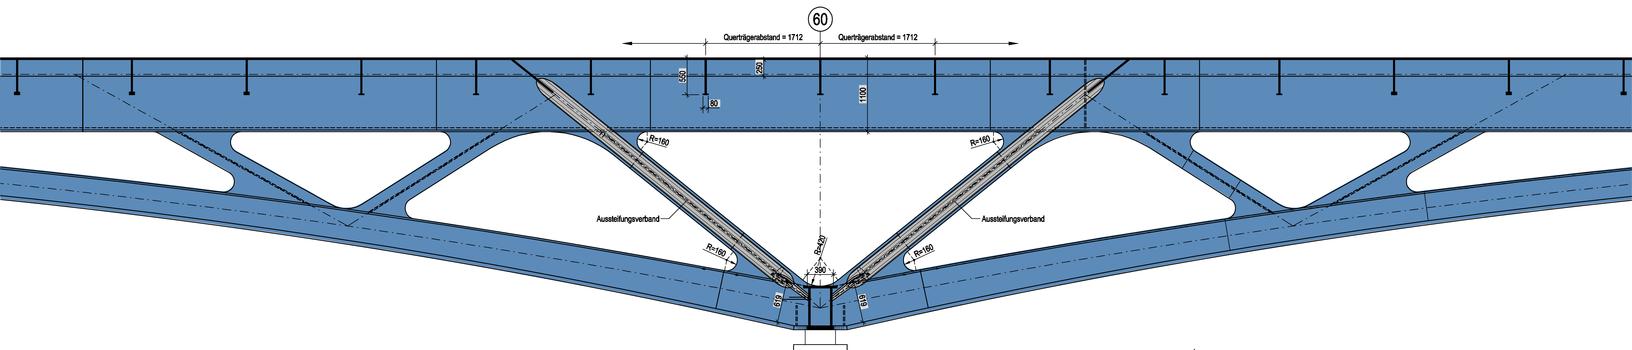 Binnenhafen Viaduct for Hamburg elevated transit systemLongitudinal section - Axis 60